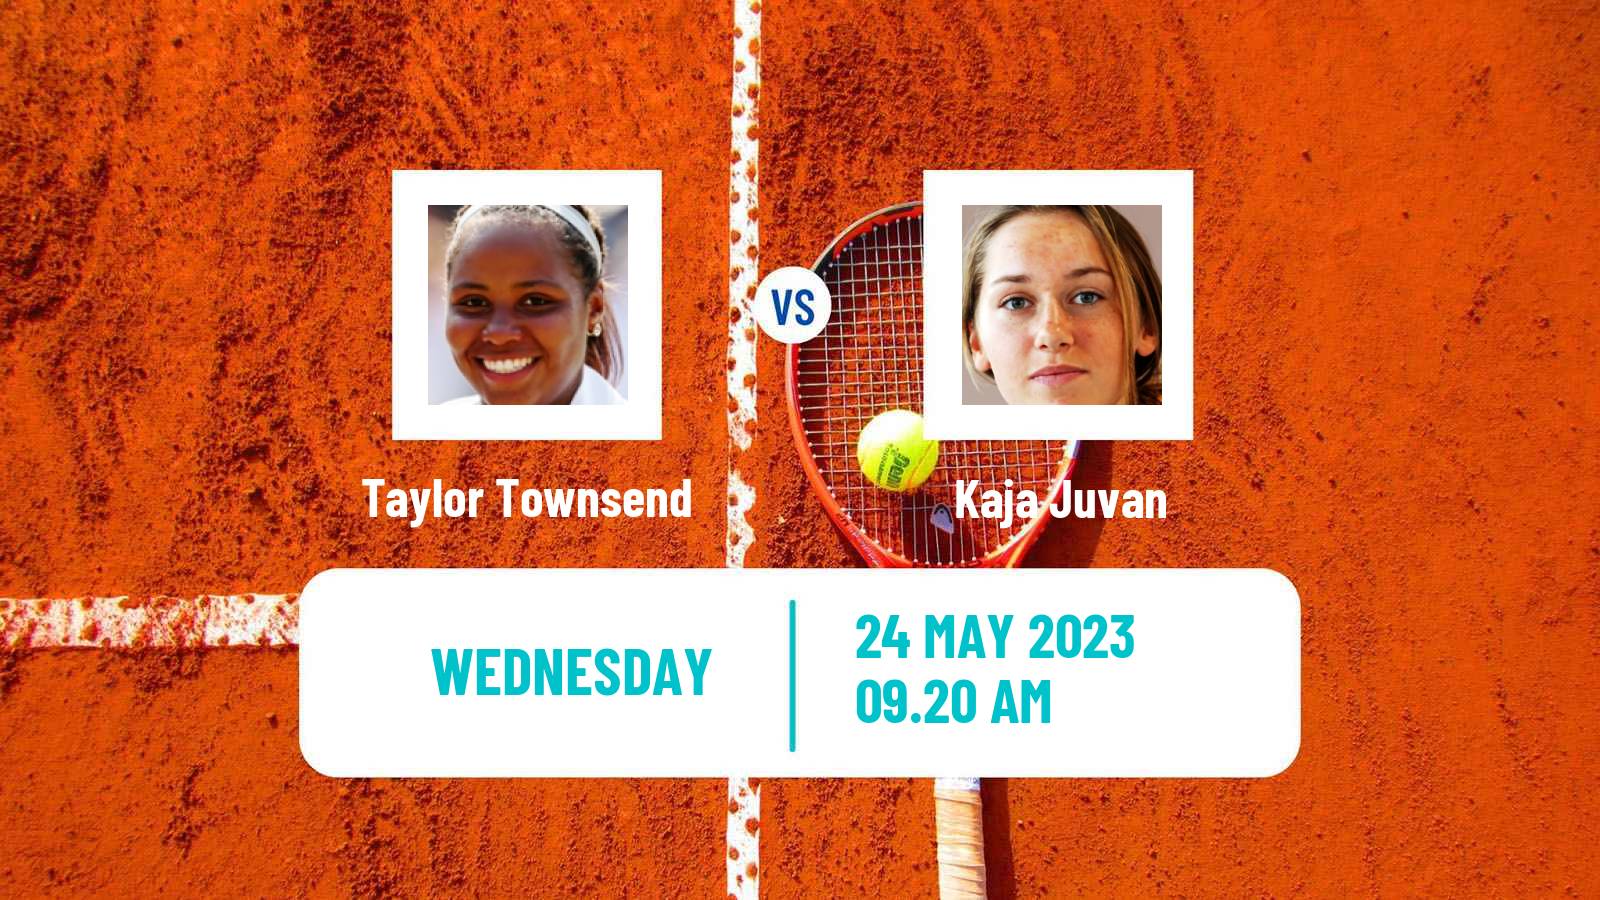 Tennis WTA Roland Garros Taylor Townsend - Kaja Juvan